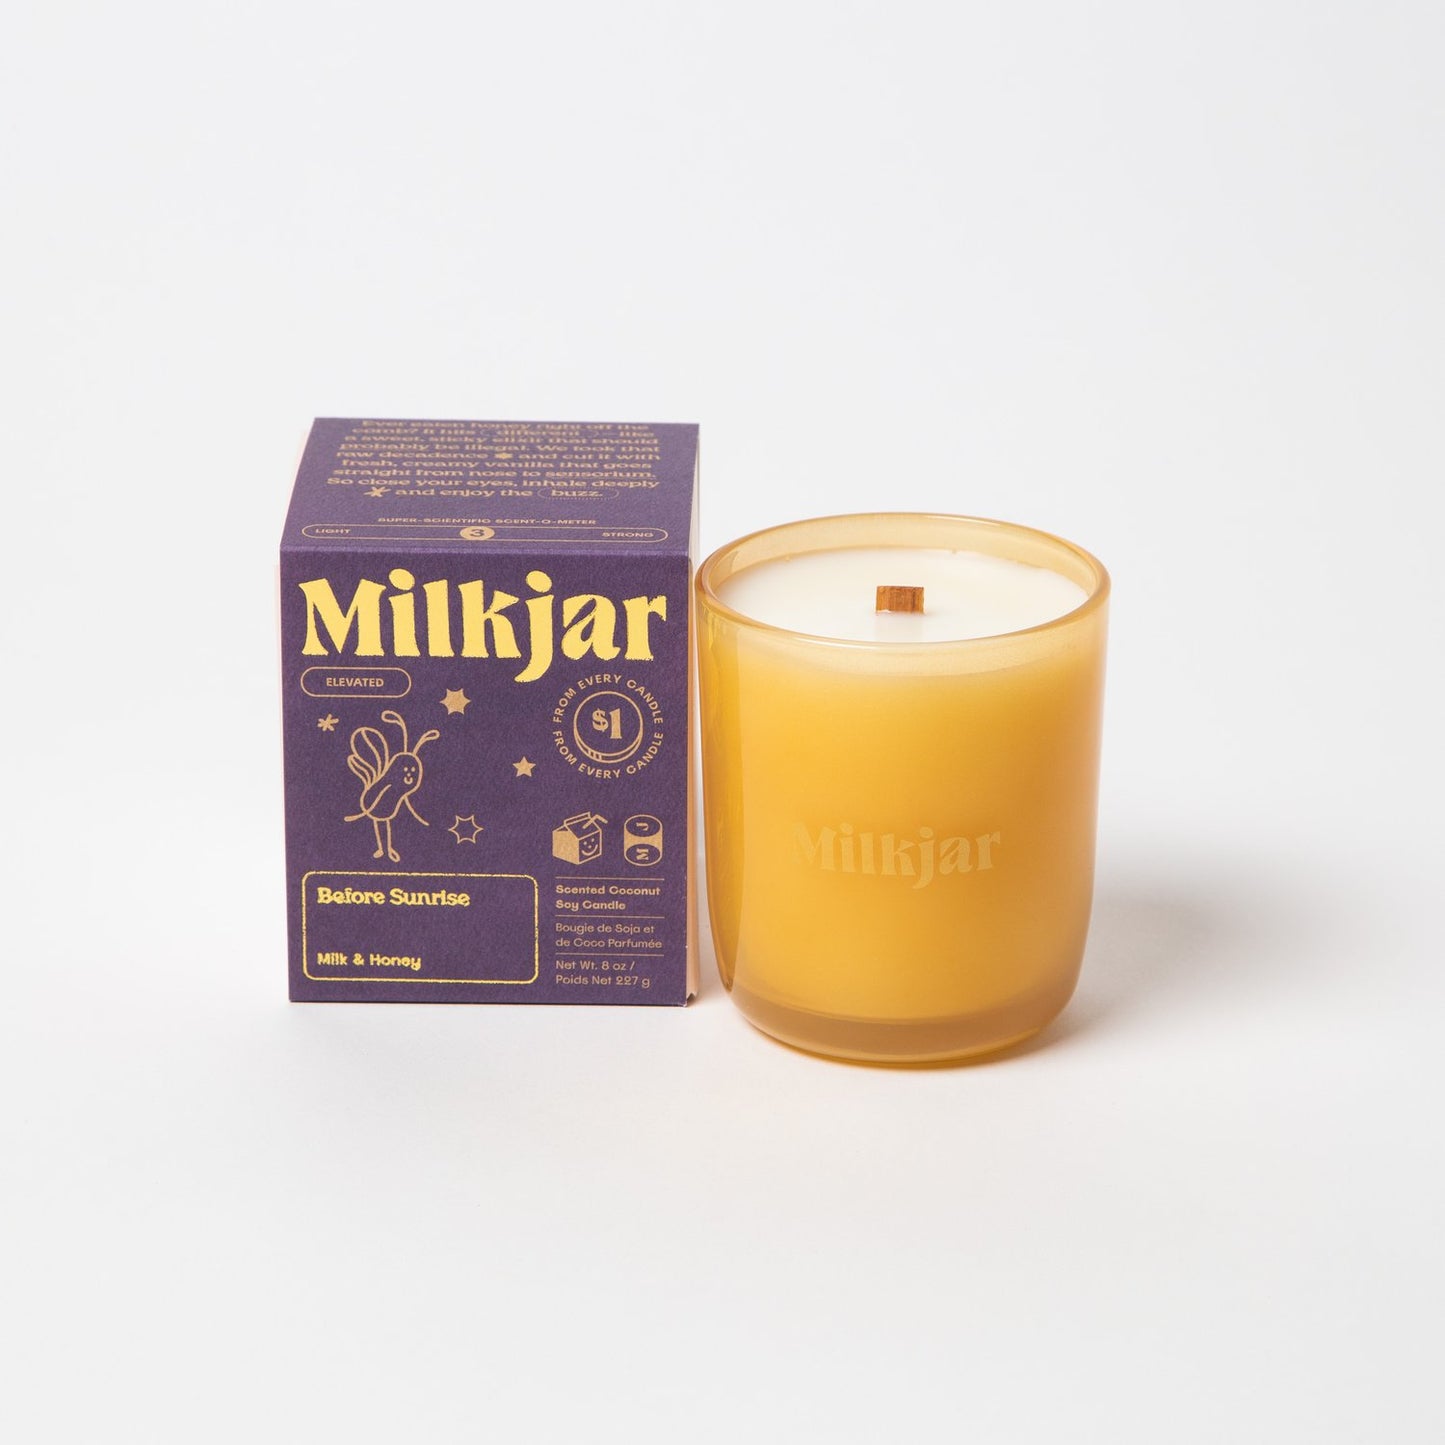 Milk Jar Candle Co / Before Sunrise